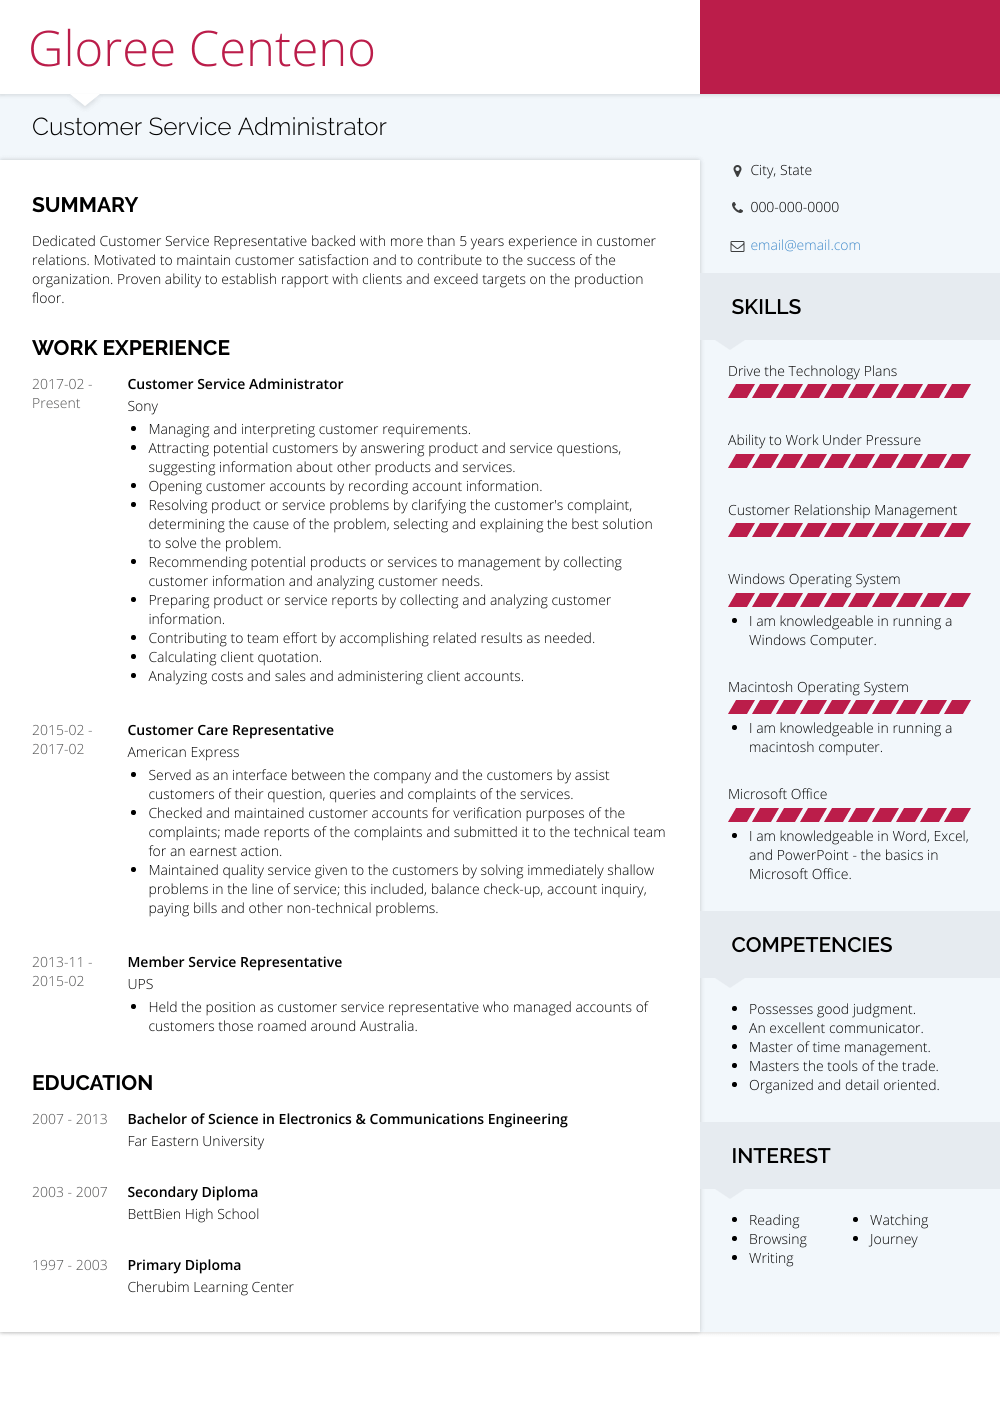 Resume For Customer Service Customer Service Modern resume for customer service|wikiresume.com